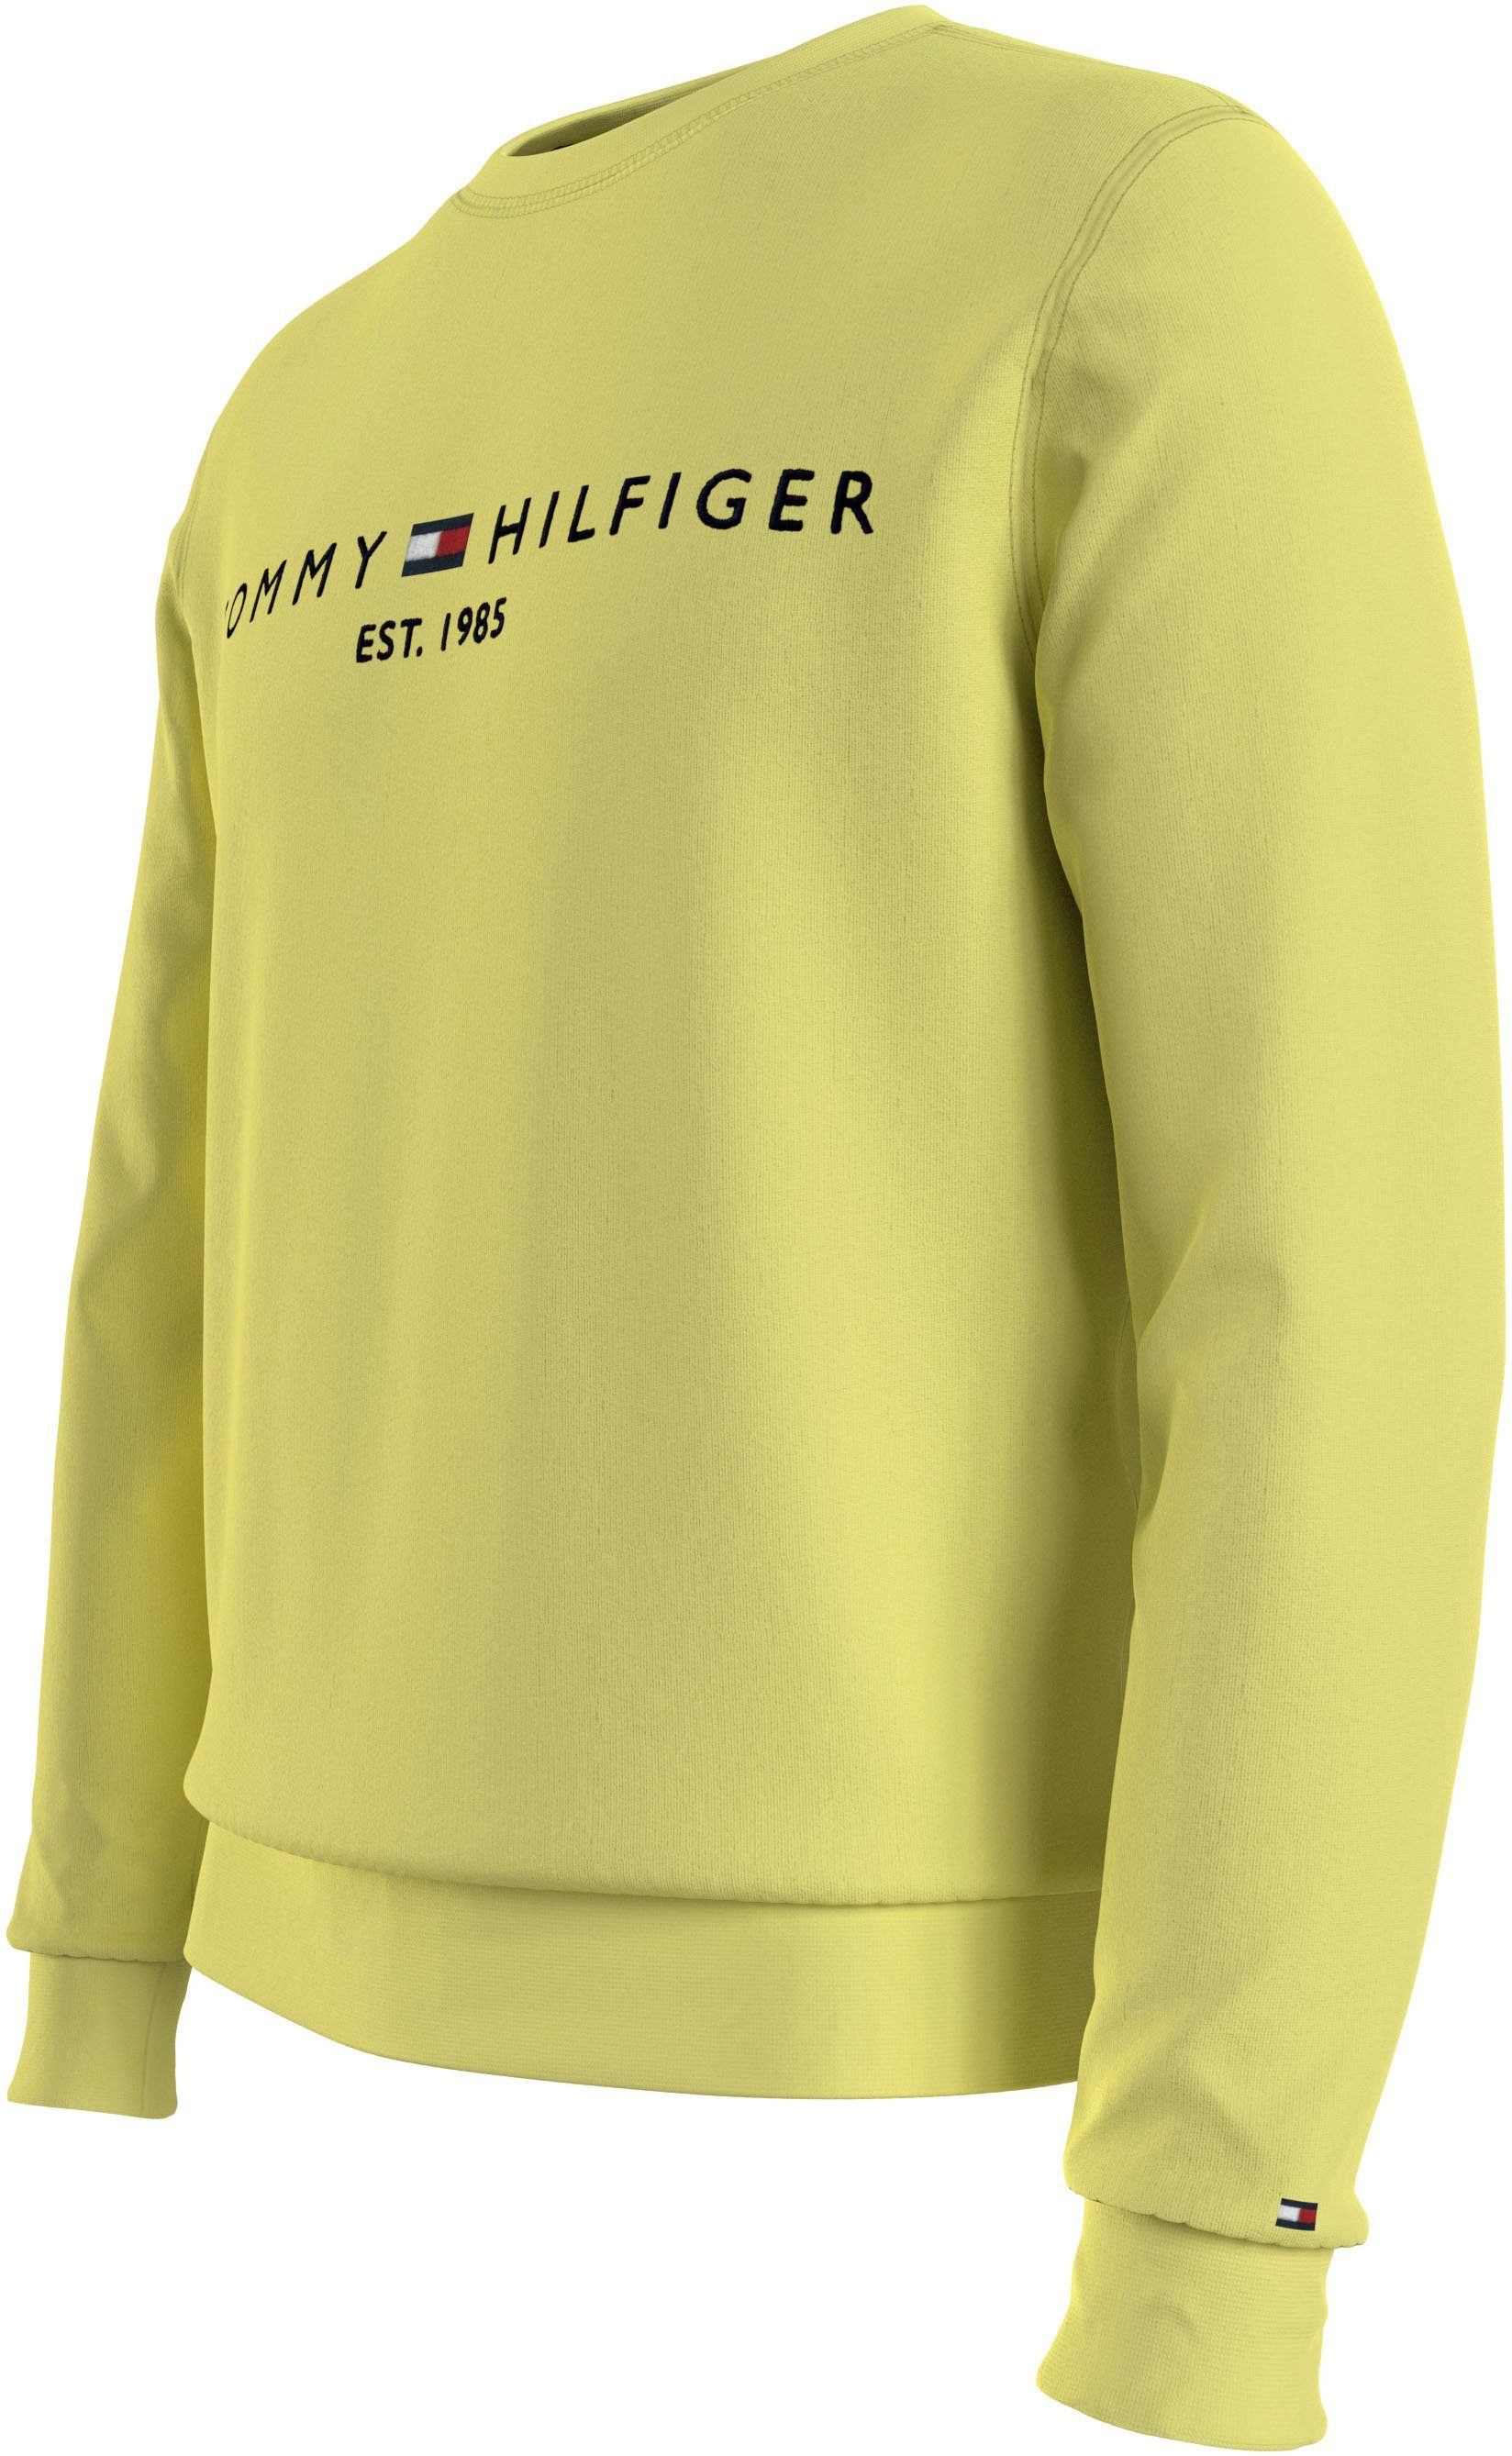 Tommy Hilfiger Sweatshirt TOMMY LOGO SWEATSHIRT met klassieke ronde hals